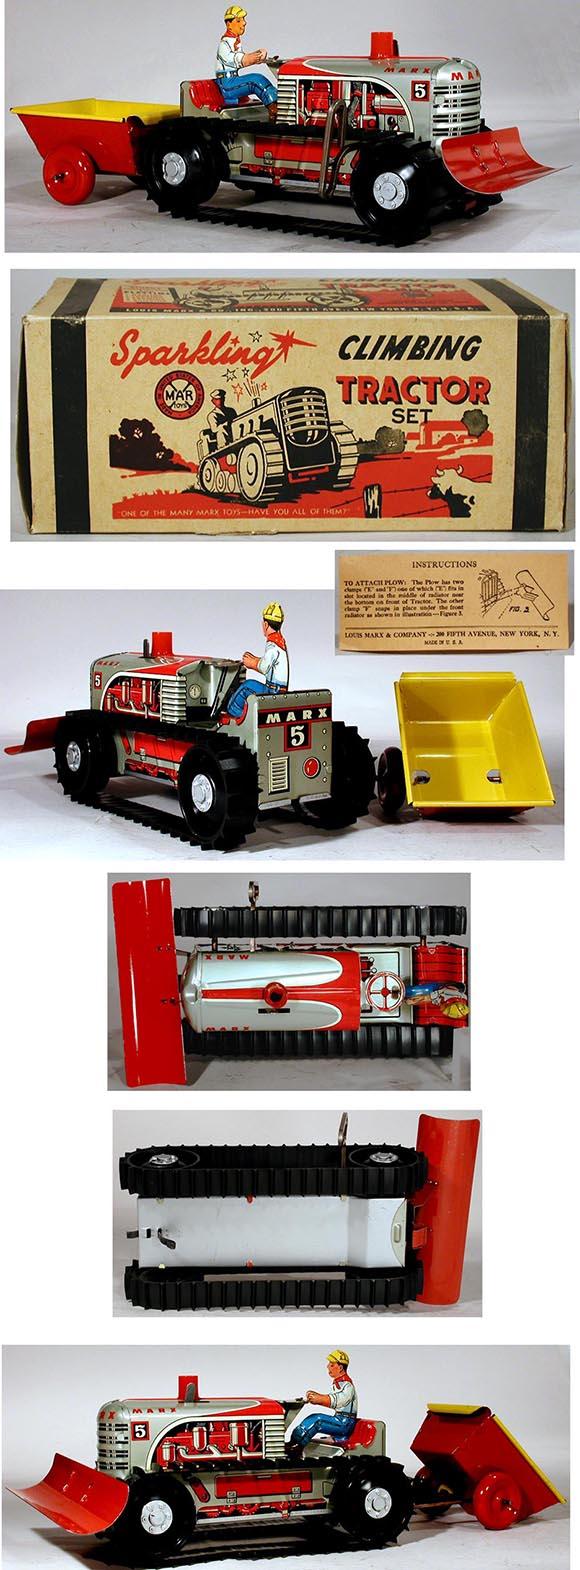 1946 Marx, #5 Sparkling Climbing Tractor Set in Original Box